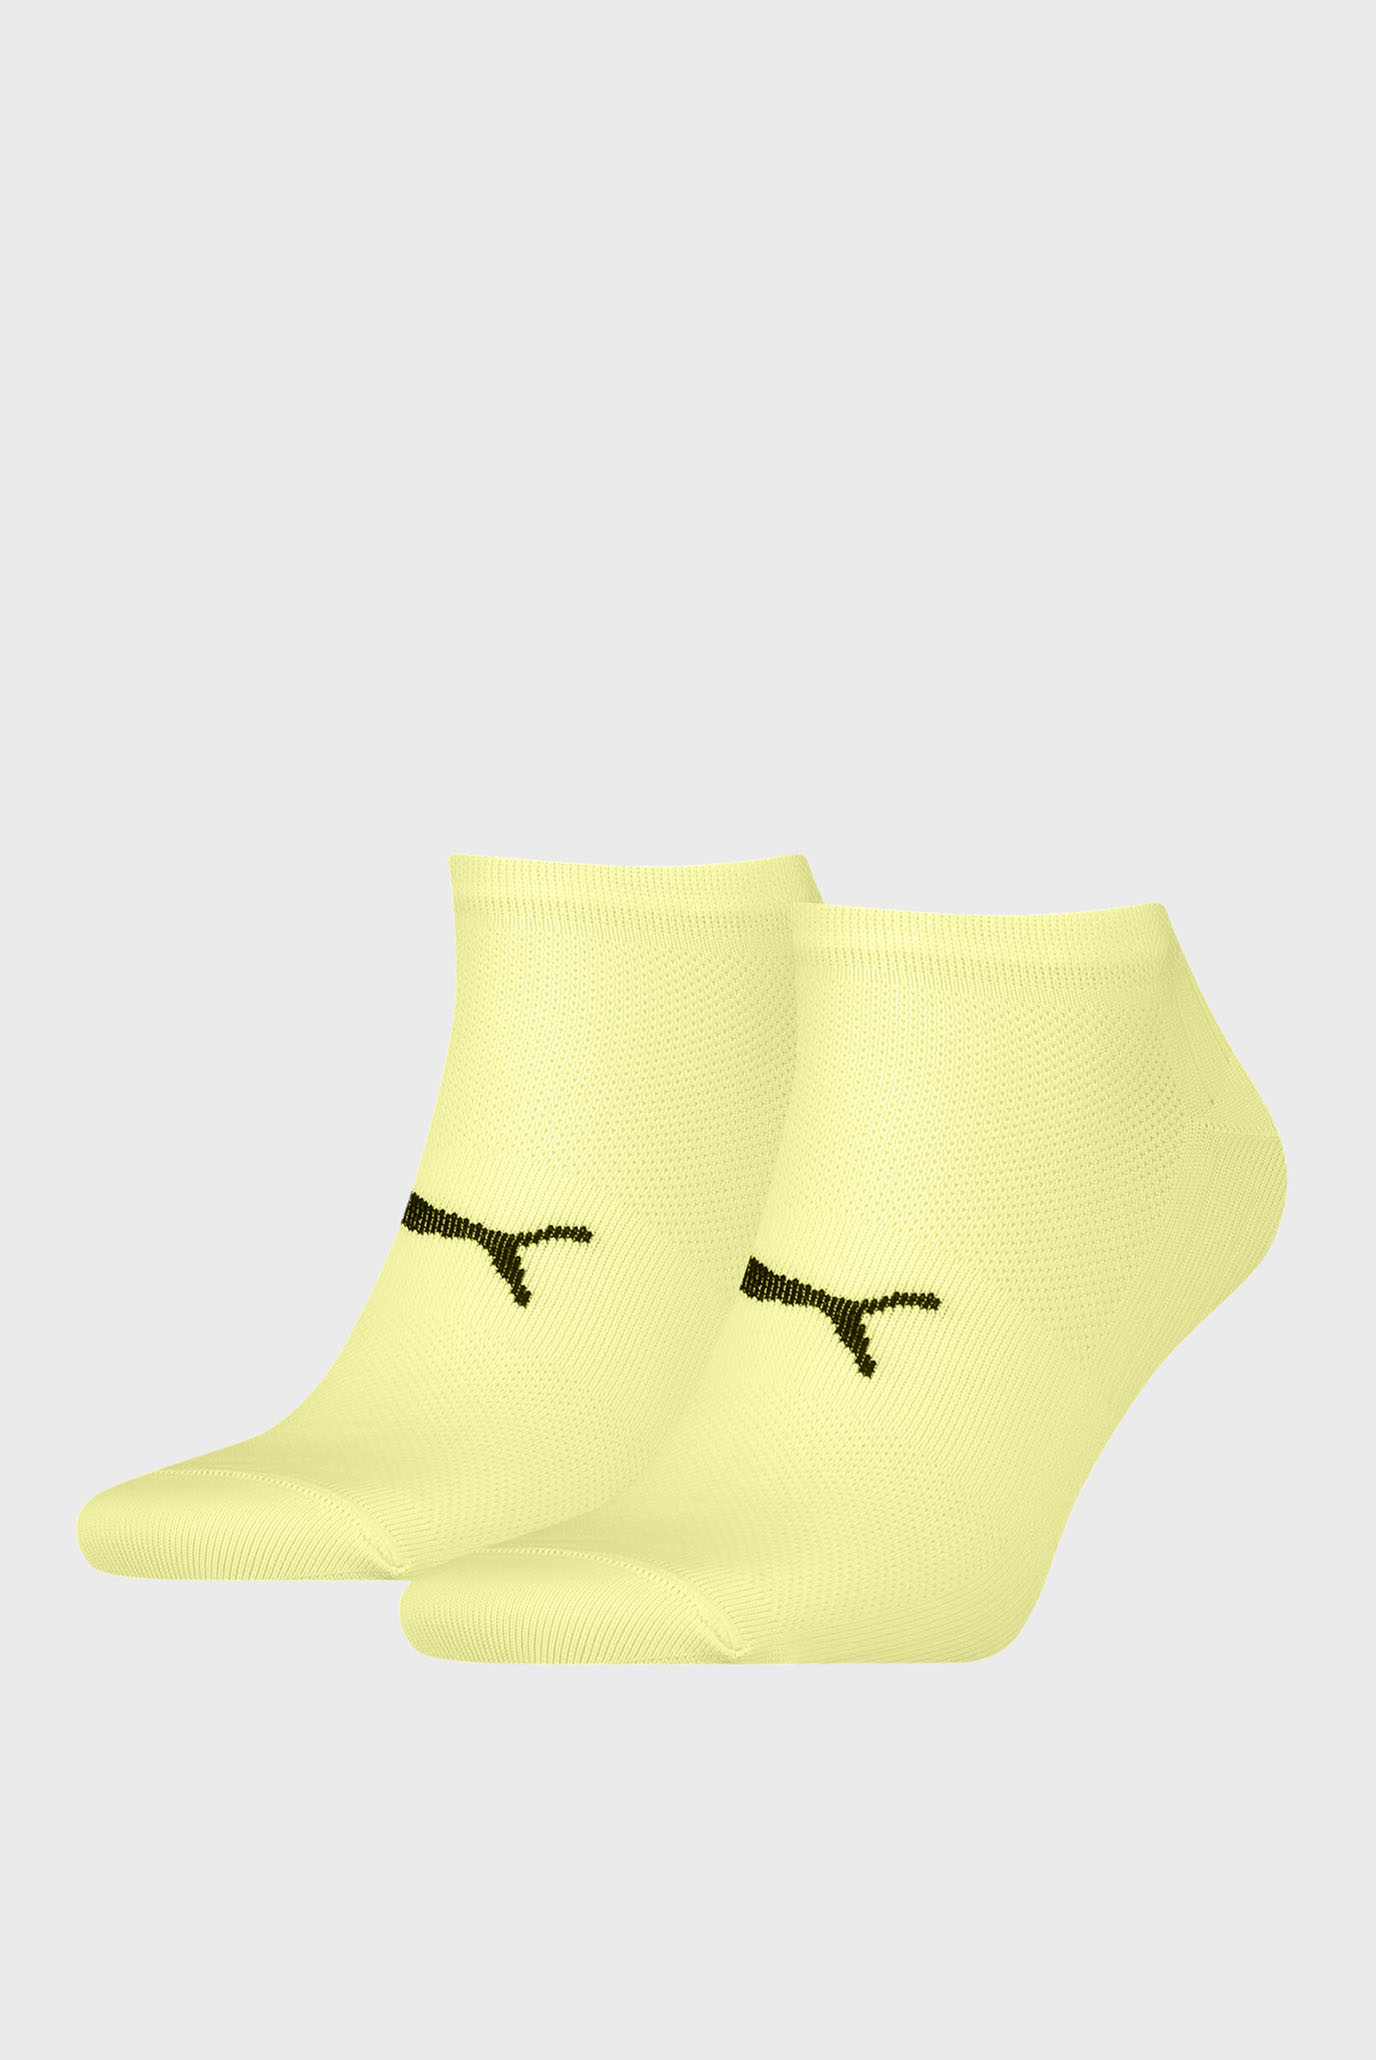 Желтые носки PUMA Sport Unisex Light Sneaker Socks 2 Pack 1